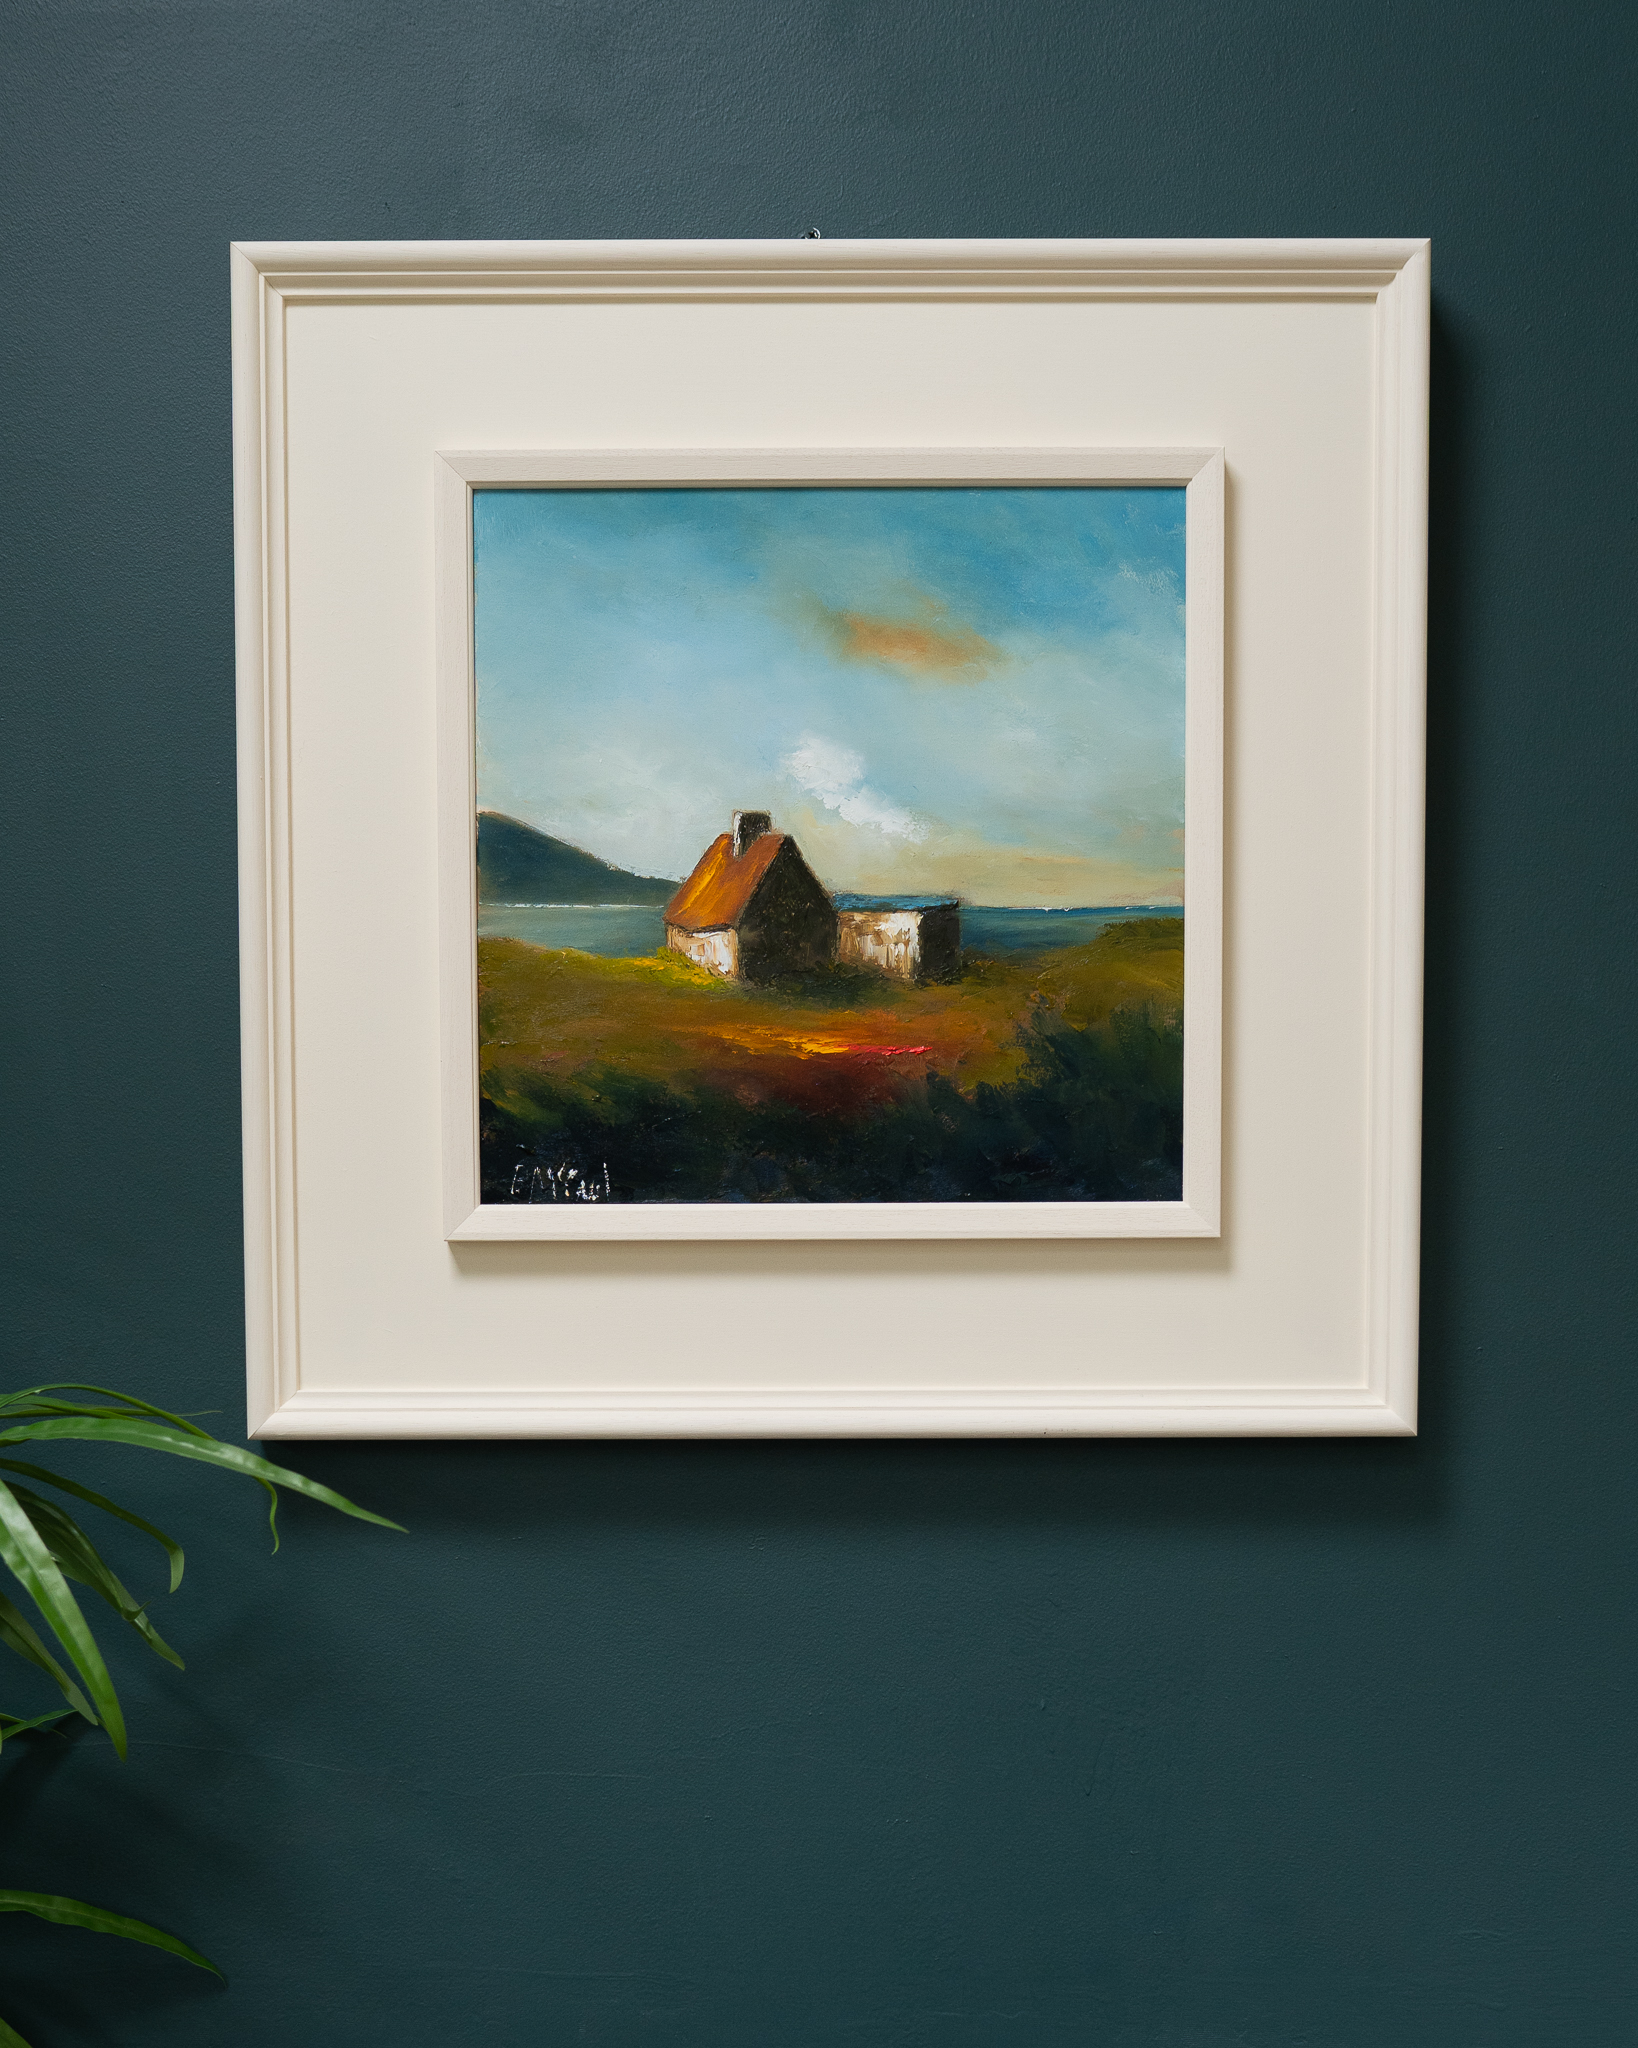 Padraig McCaul original oil painting oil on canvas contemporary art Irish gift wild atlantic way beautiful interiors house home office design decor gift